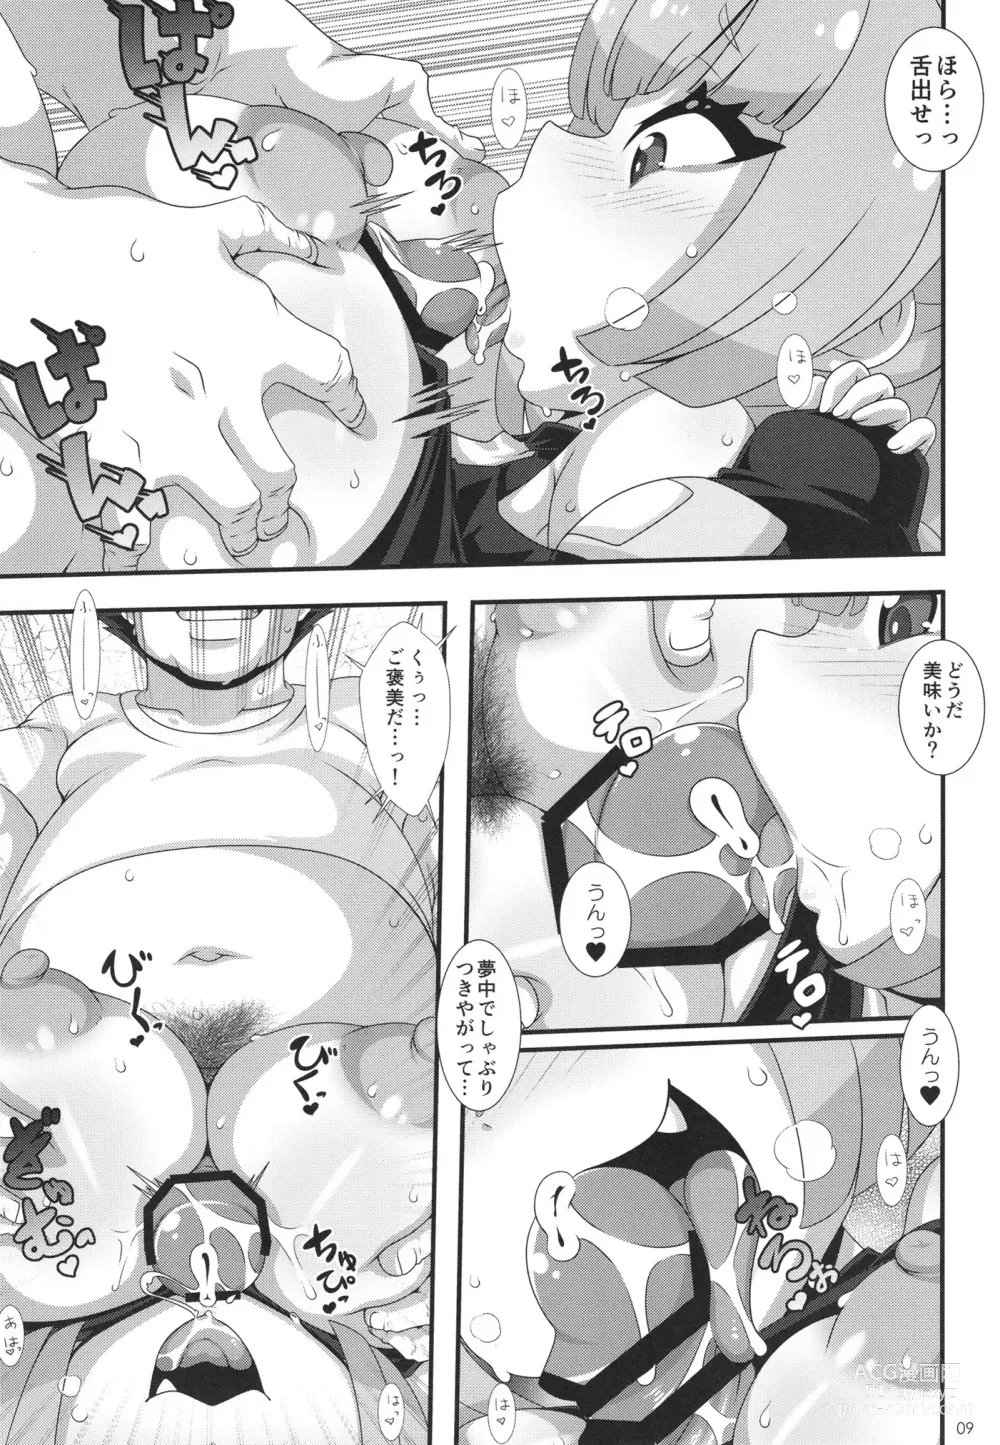 Page 9 of doujinshi PKGK